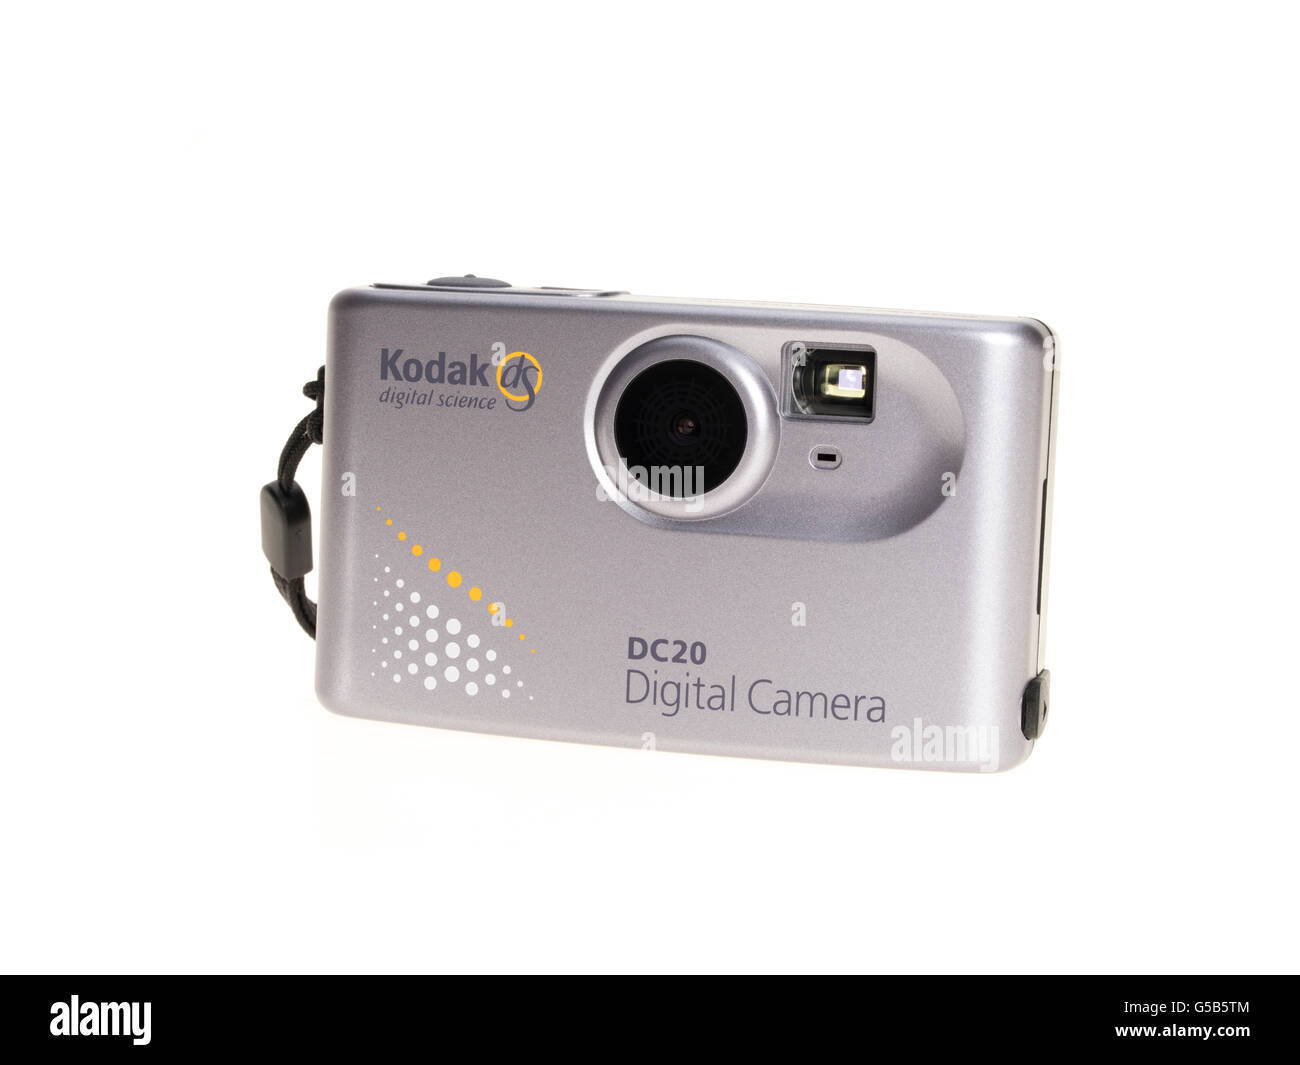 Kodak dS digital science DC20 digital camera released by Kodak in 1996 Stock Photo